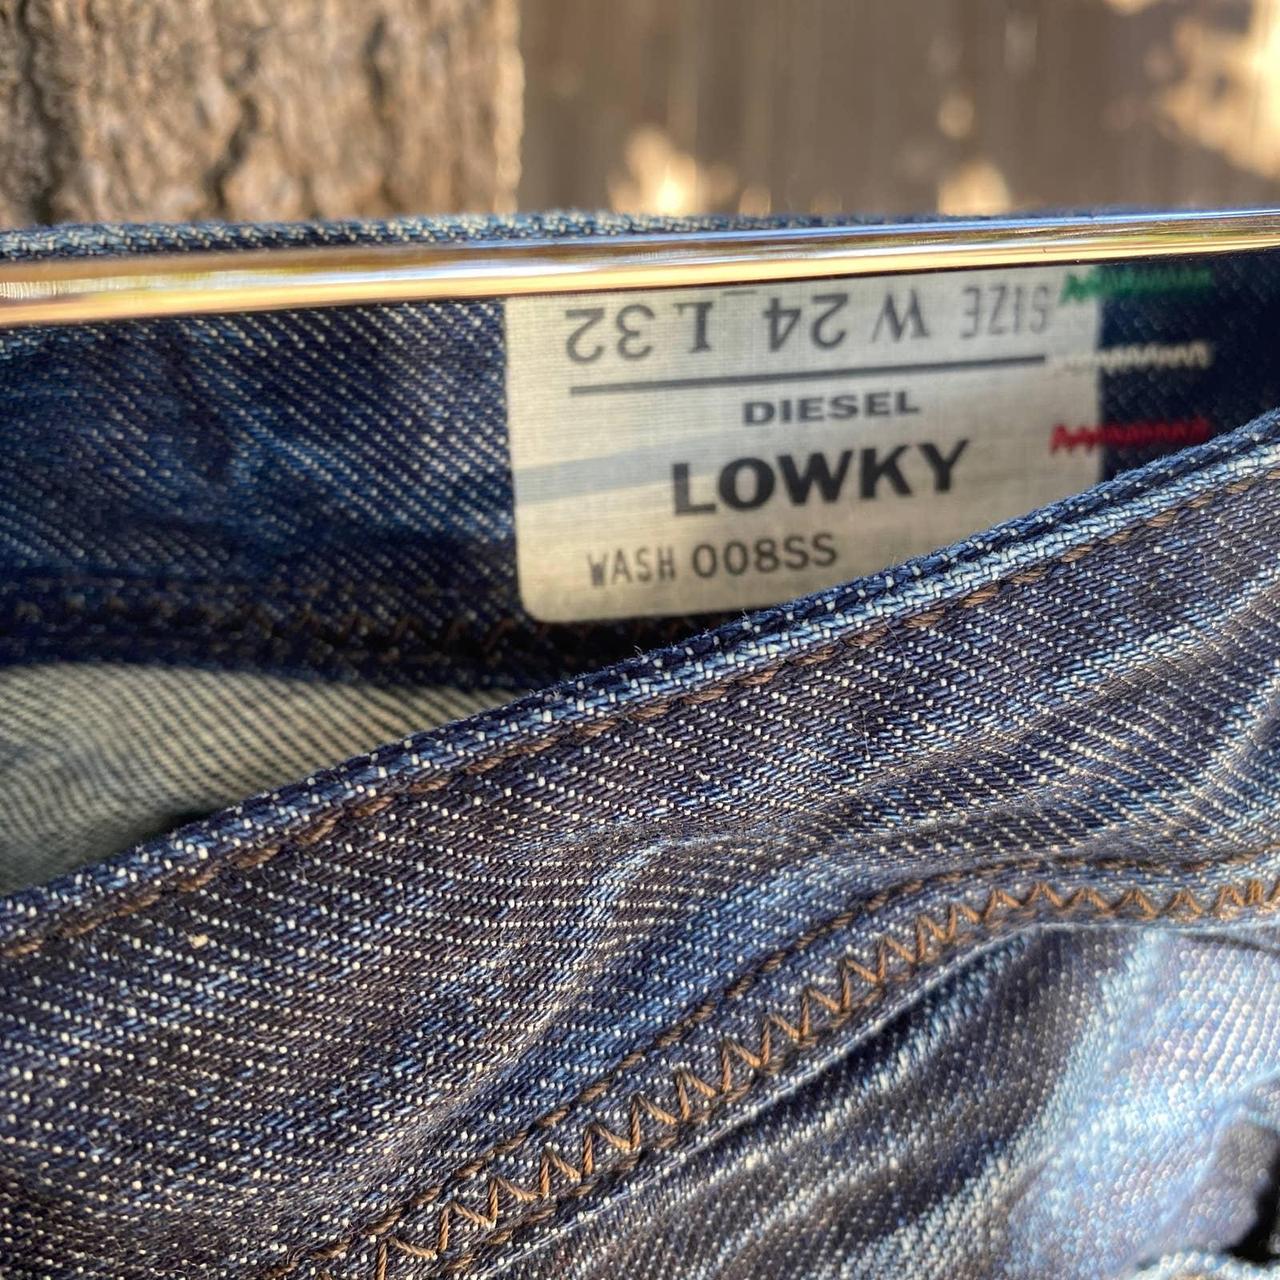 NWT Diesel Lowky Jeans Sz. 24, Dark wash, Retails for...